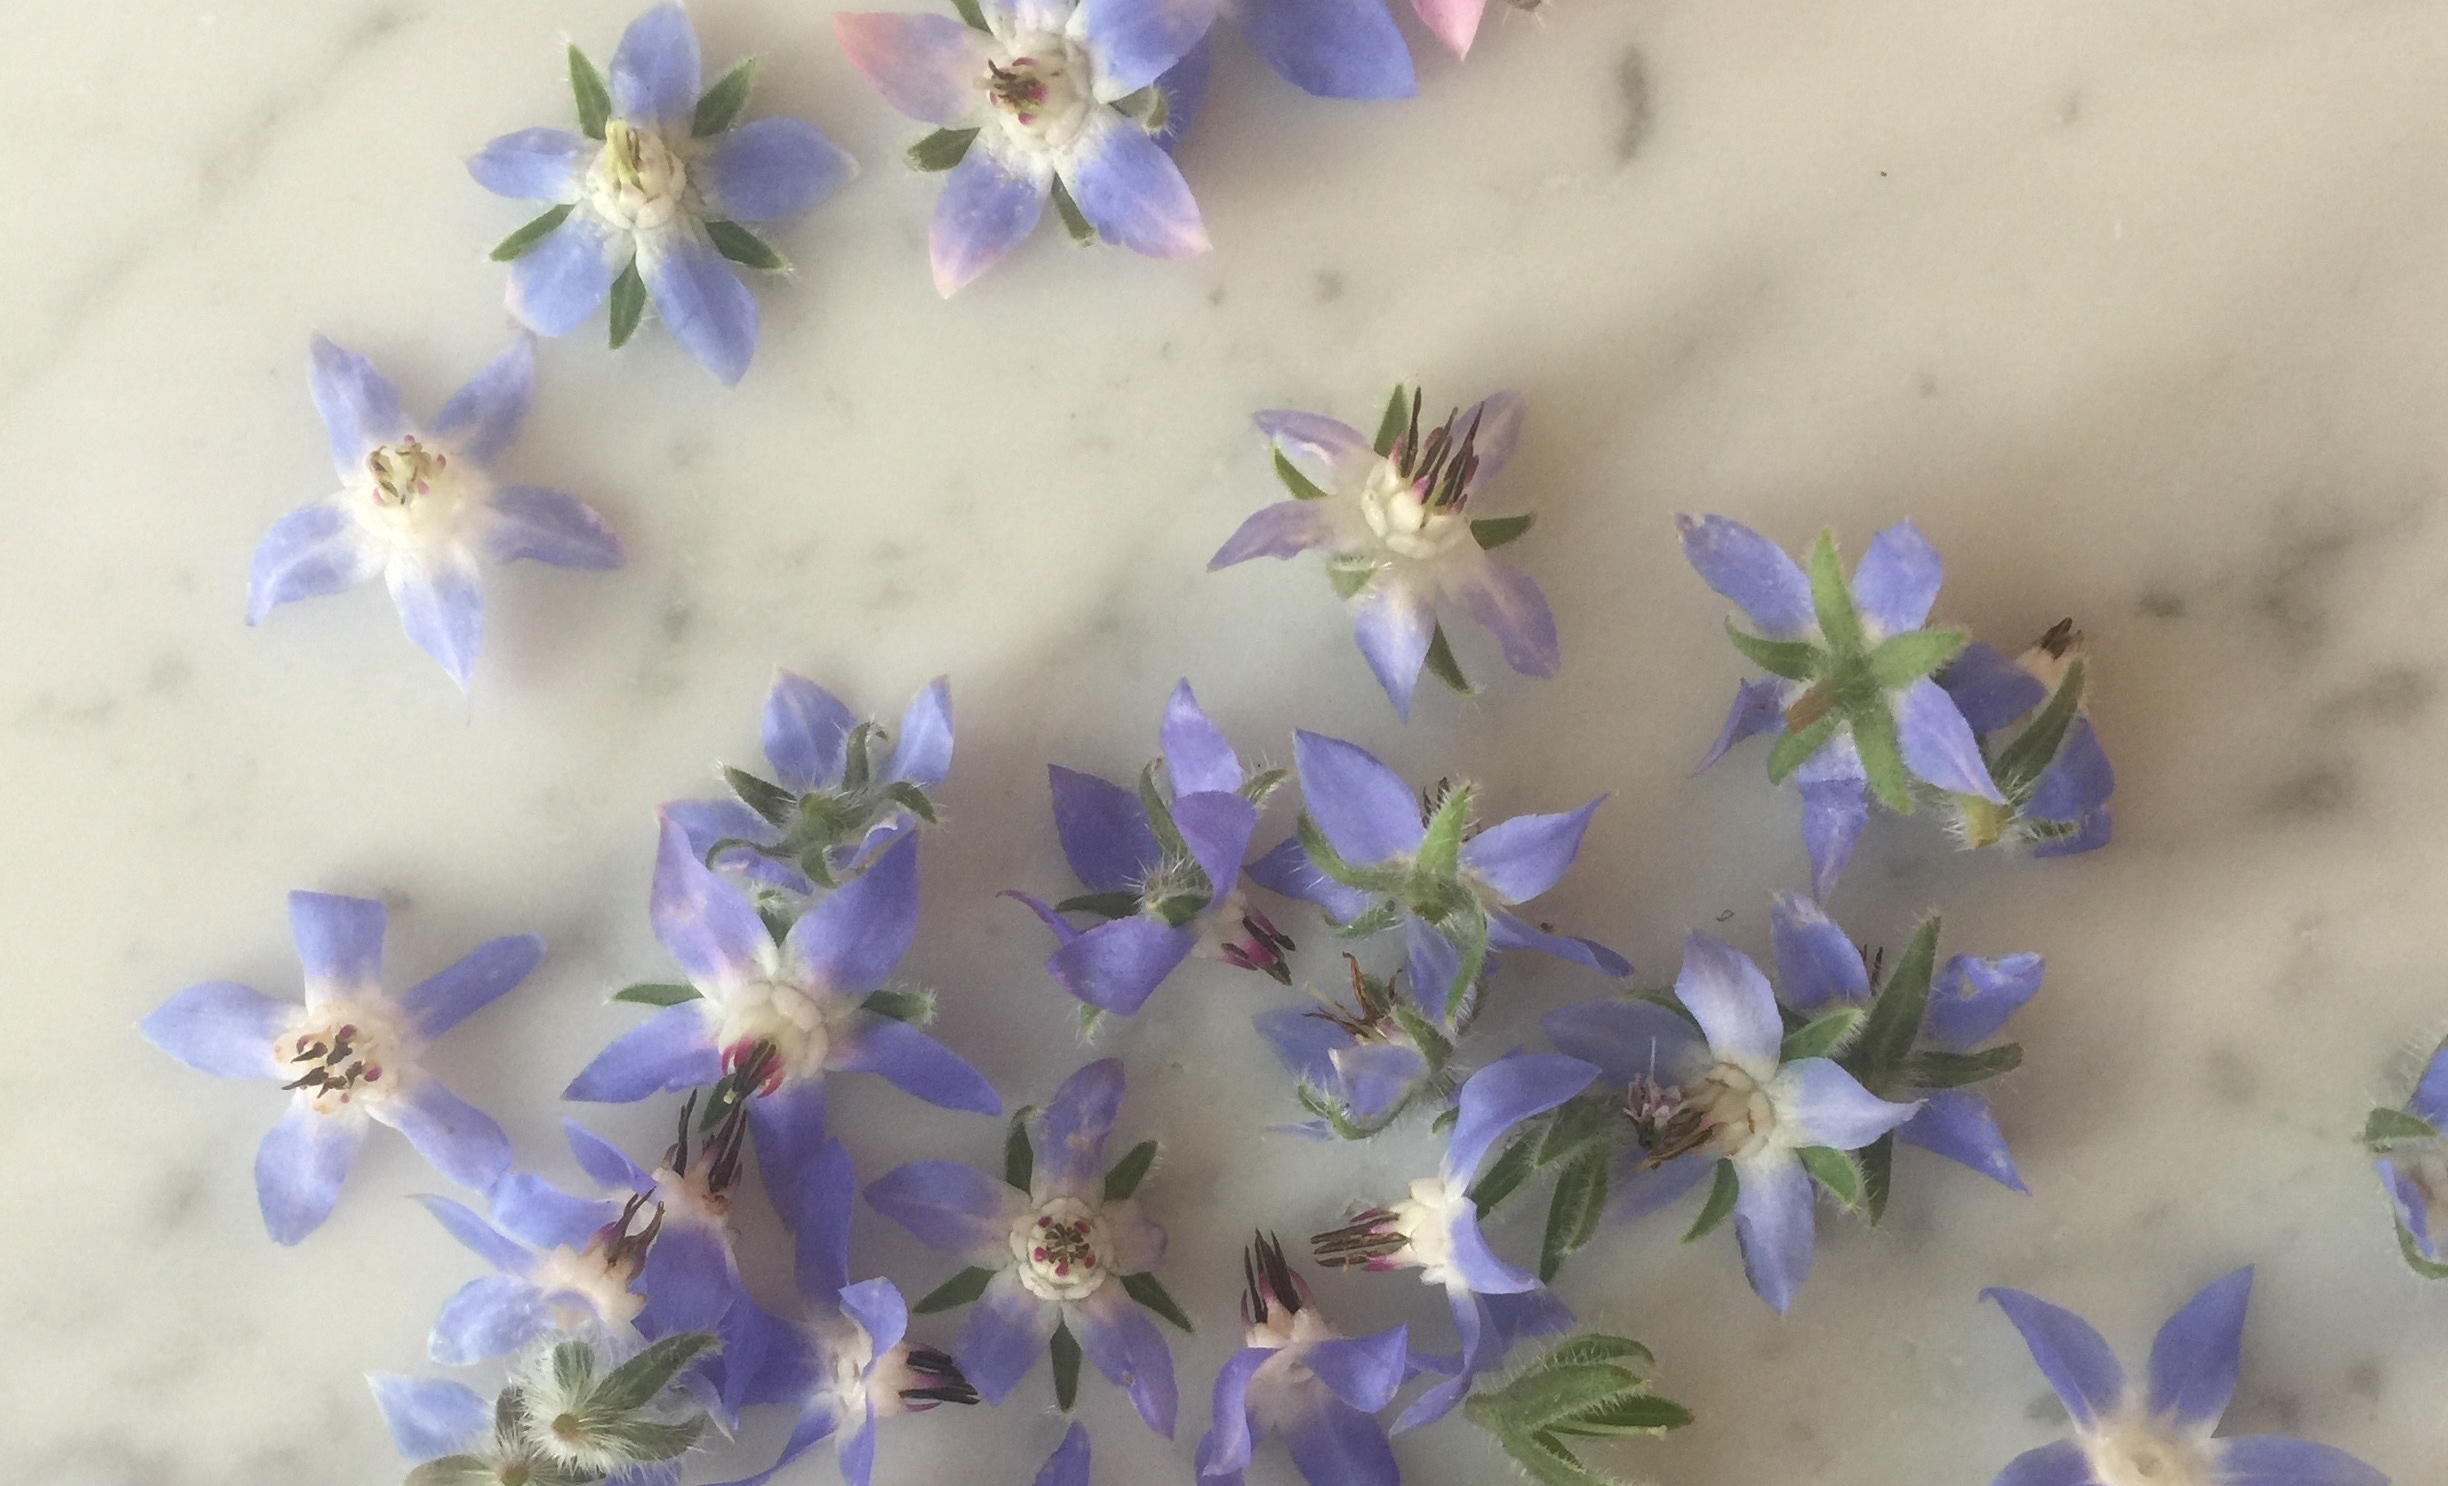 Borage flowers blue purple pink on white marble countertop forgotten herbs